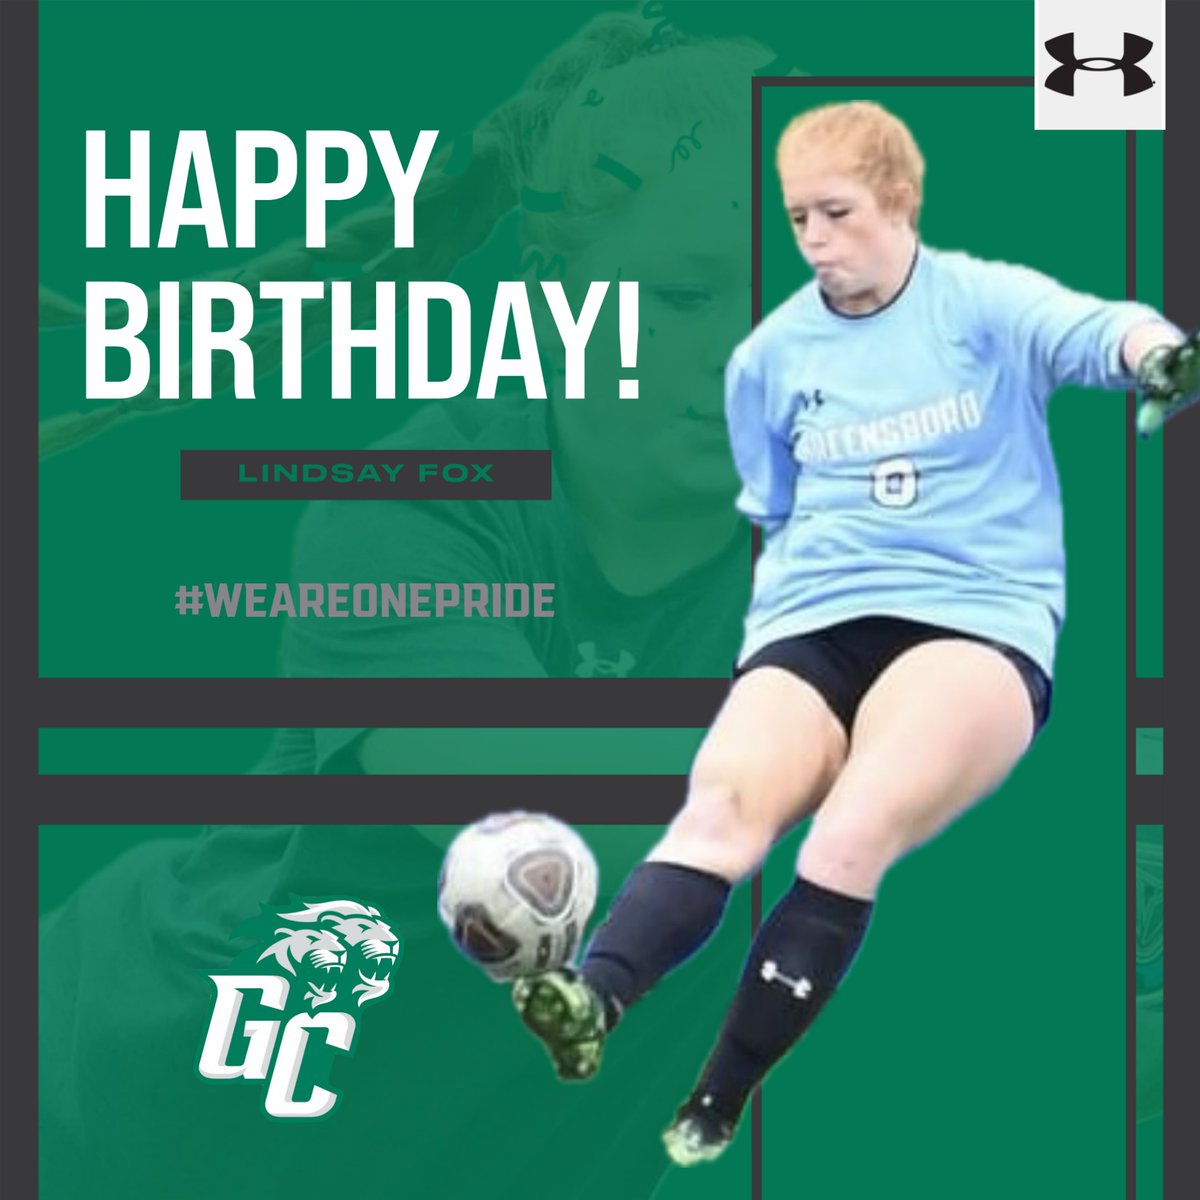 Wishing a very Happy 21st Birthday to rising senior goalkeeper, Lindsay Fox! #weareonepride